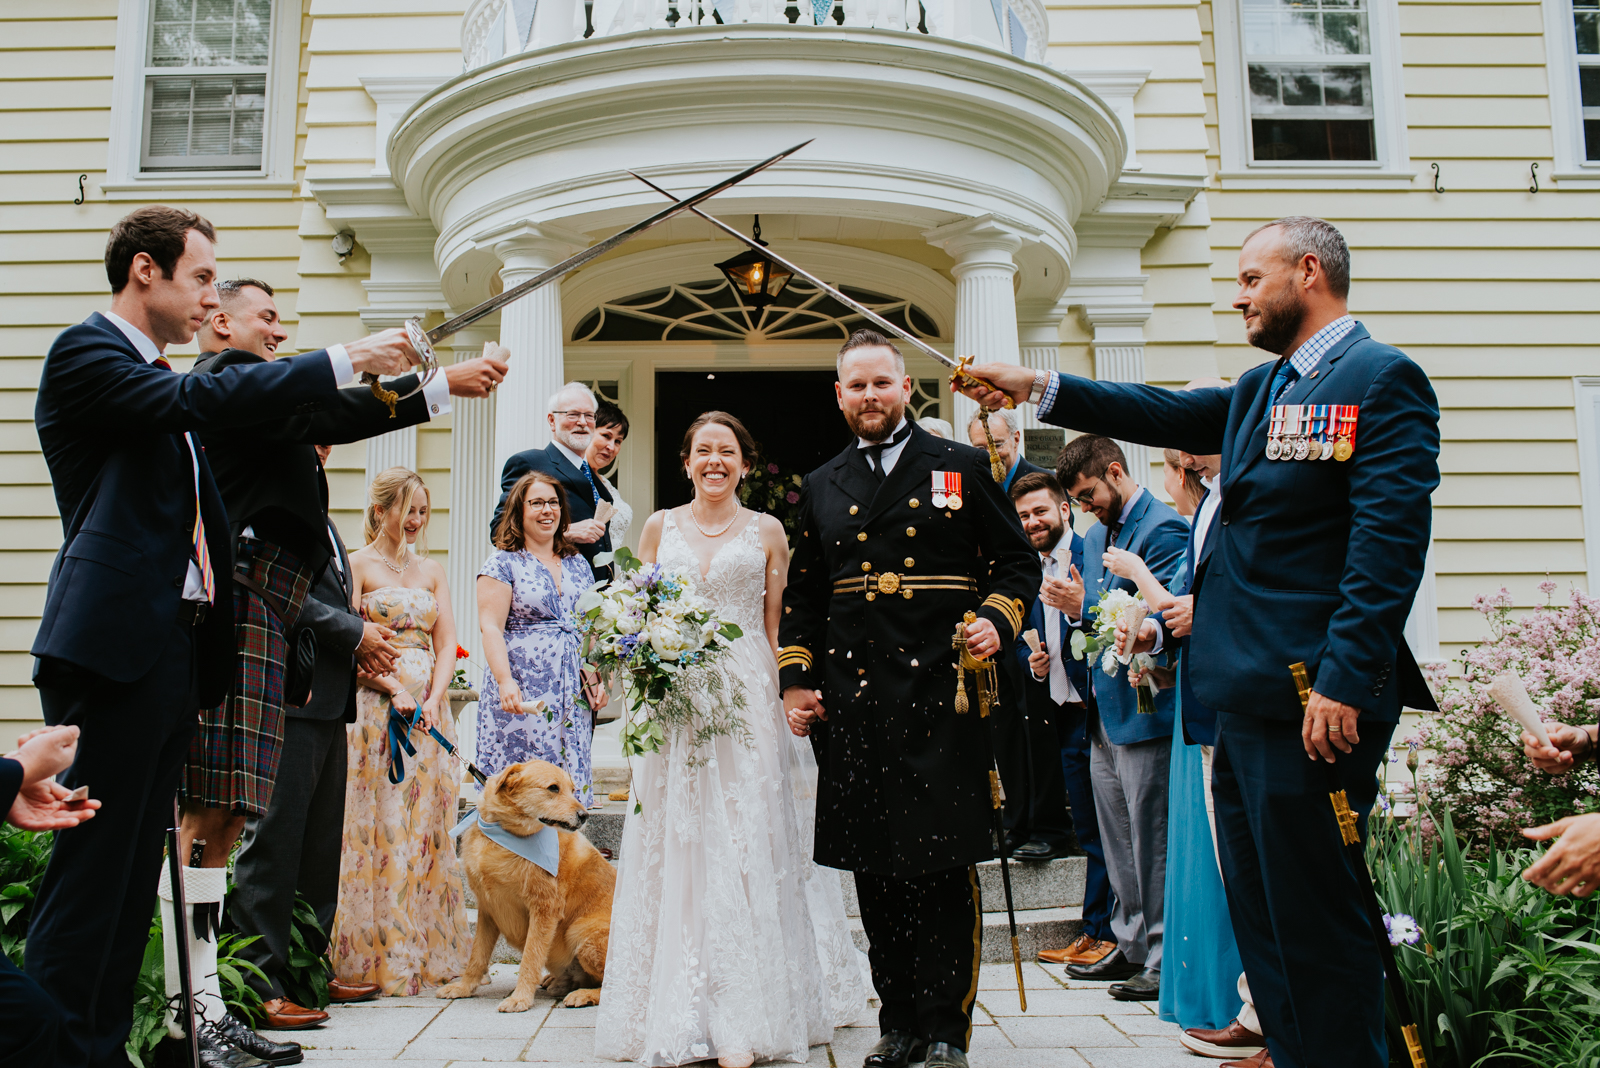 bride and groom in canadian navy uniform sword ceremony after wedding ceremony